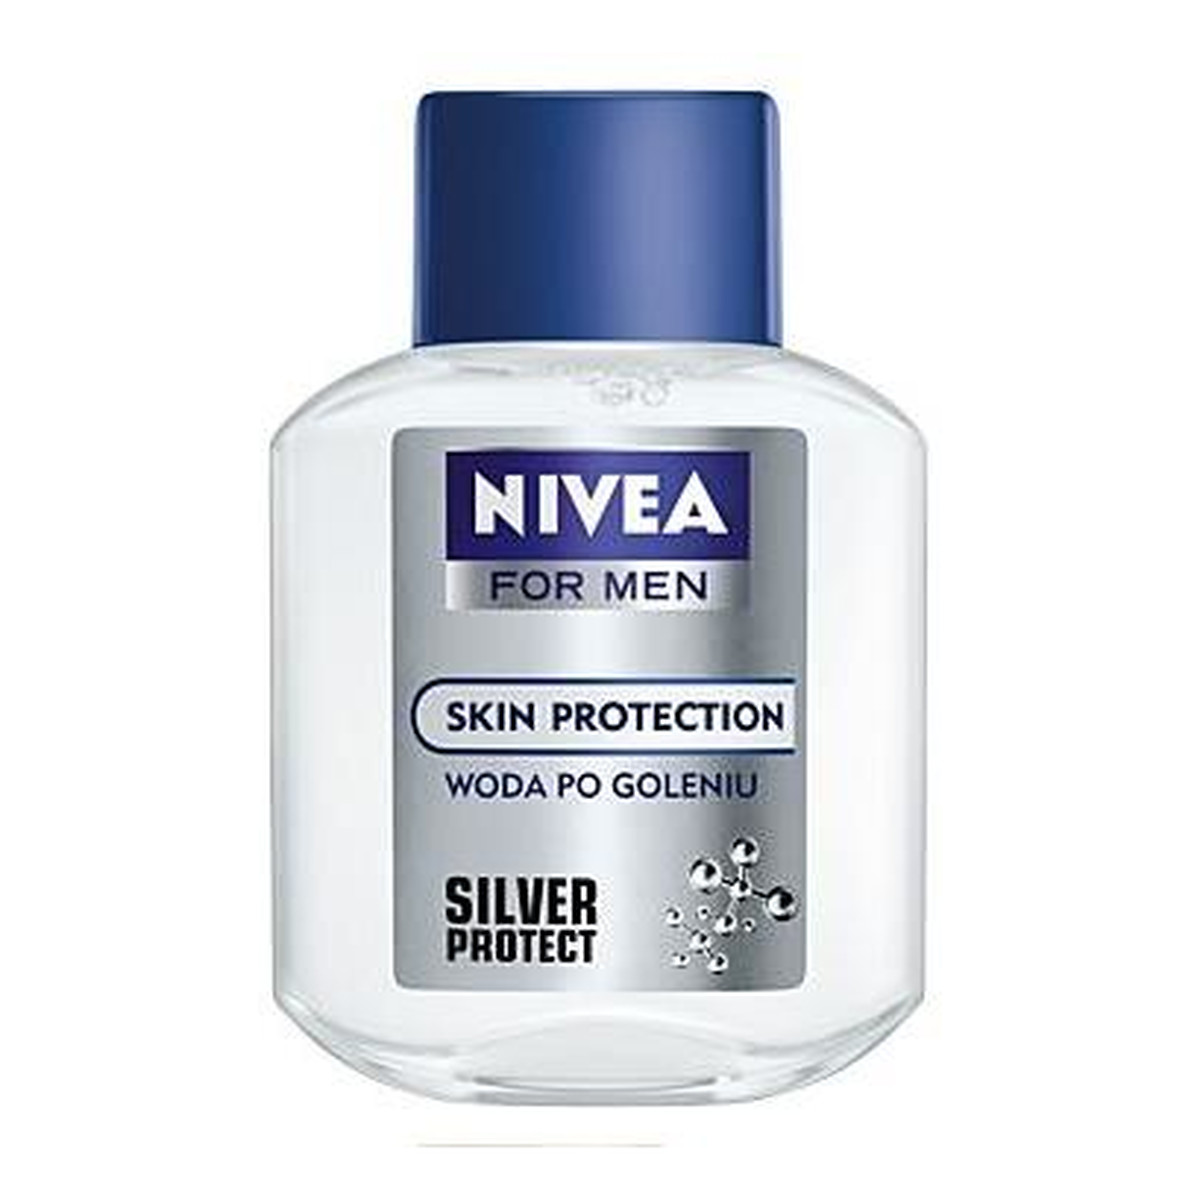 Nivea For Men Silver Protect Woda Po Goleniu Skin Protecion 100ml